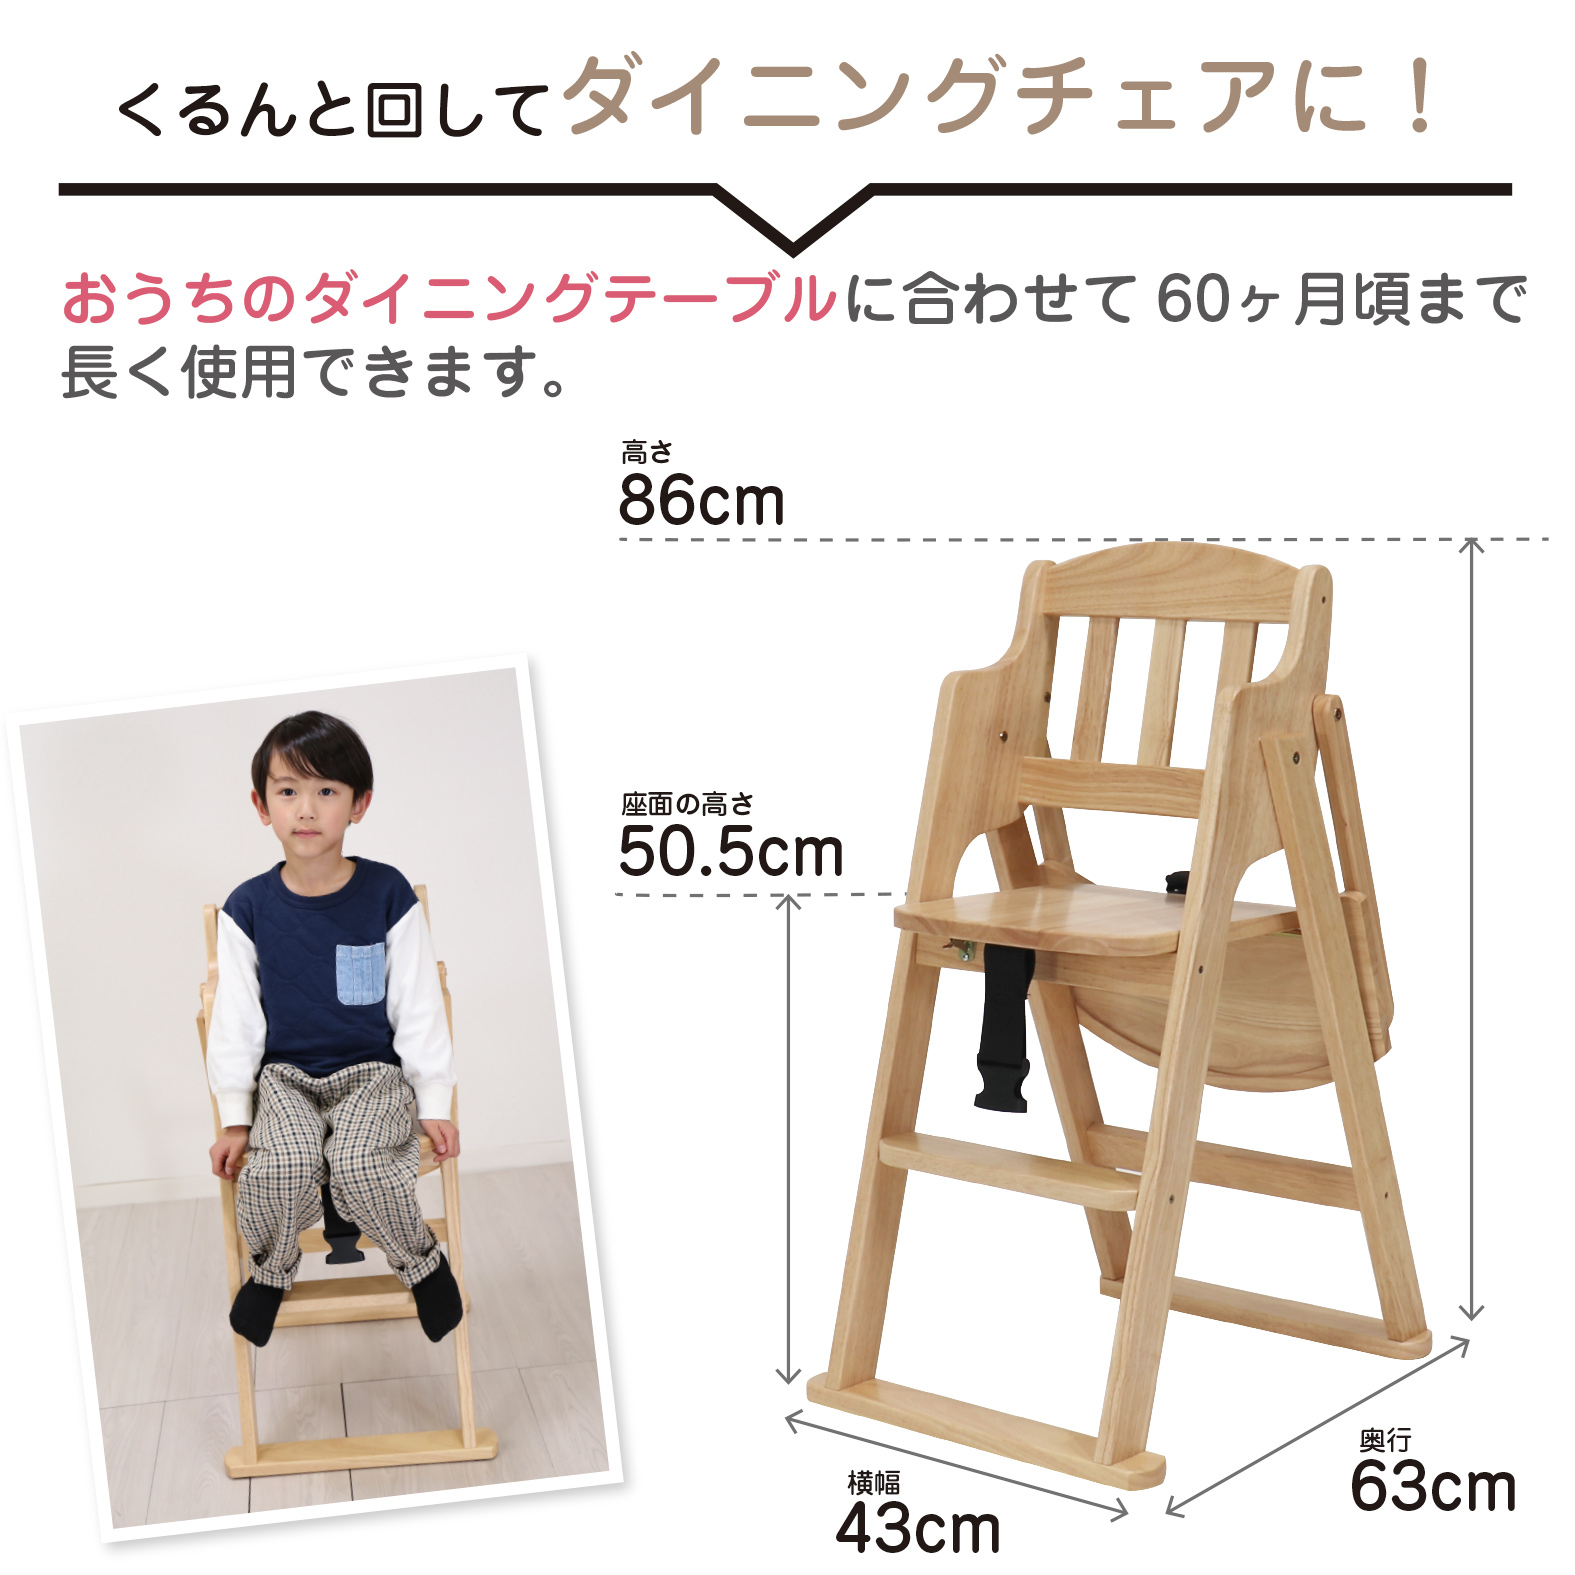  wooden high chair baby chair tatami .. folding folding wooden baby child baby dining chair stylish Kids 